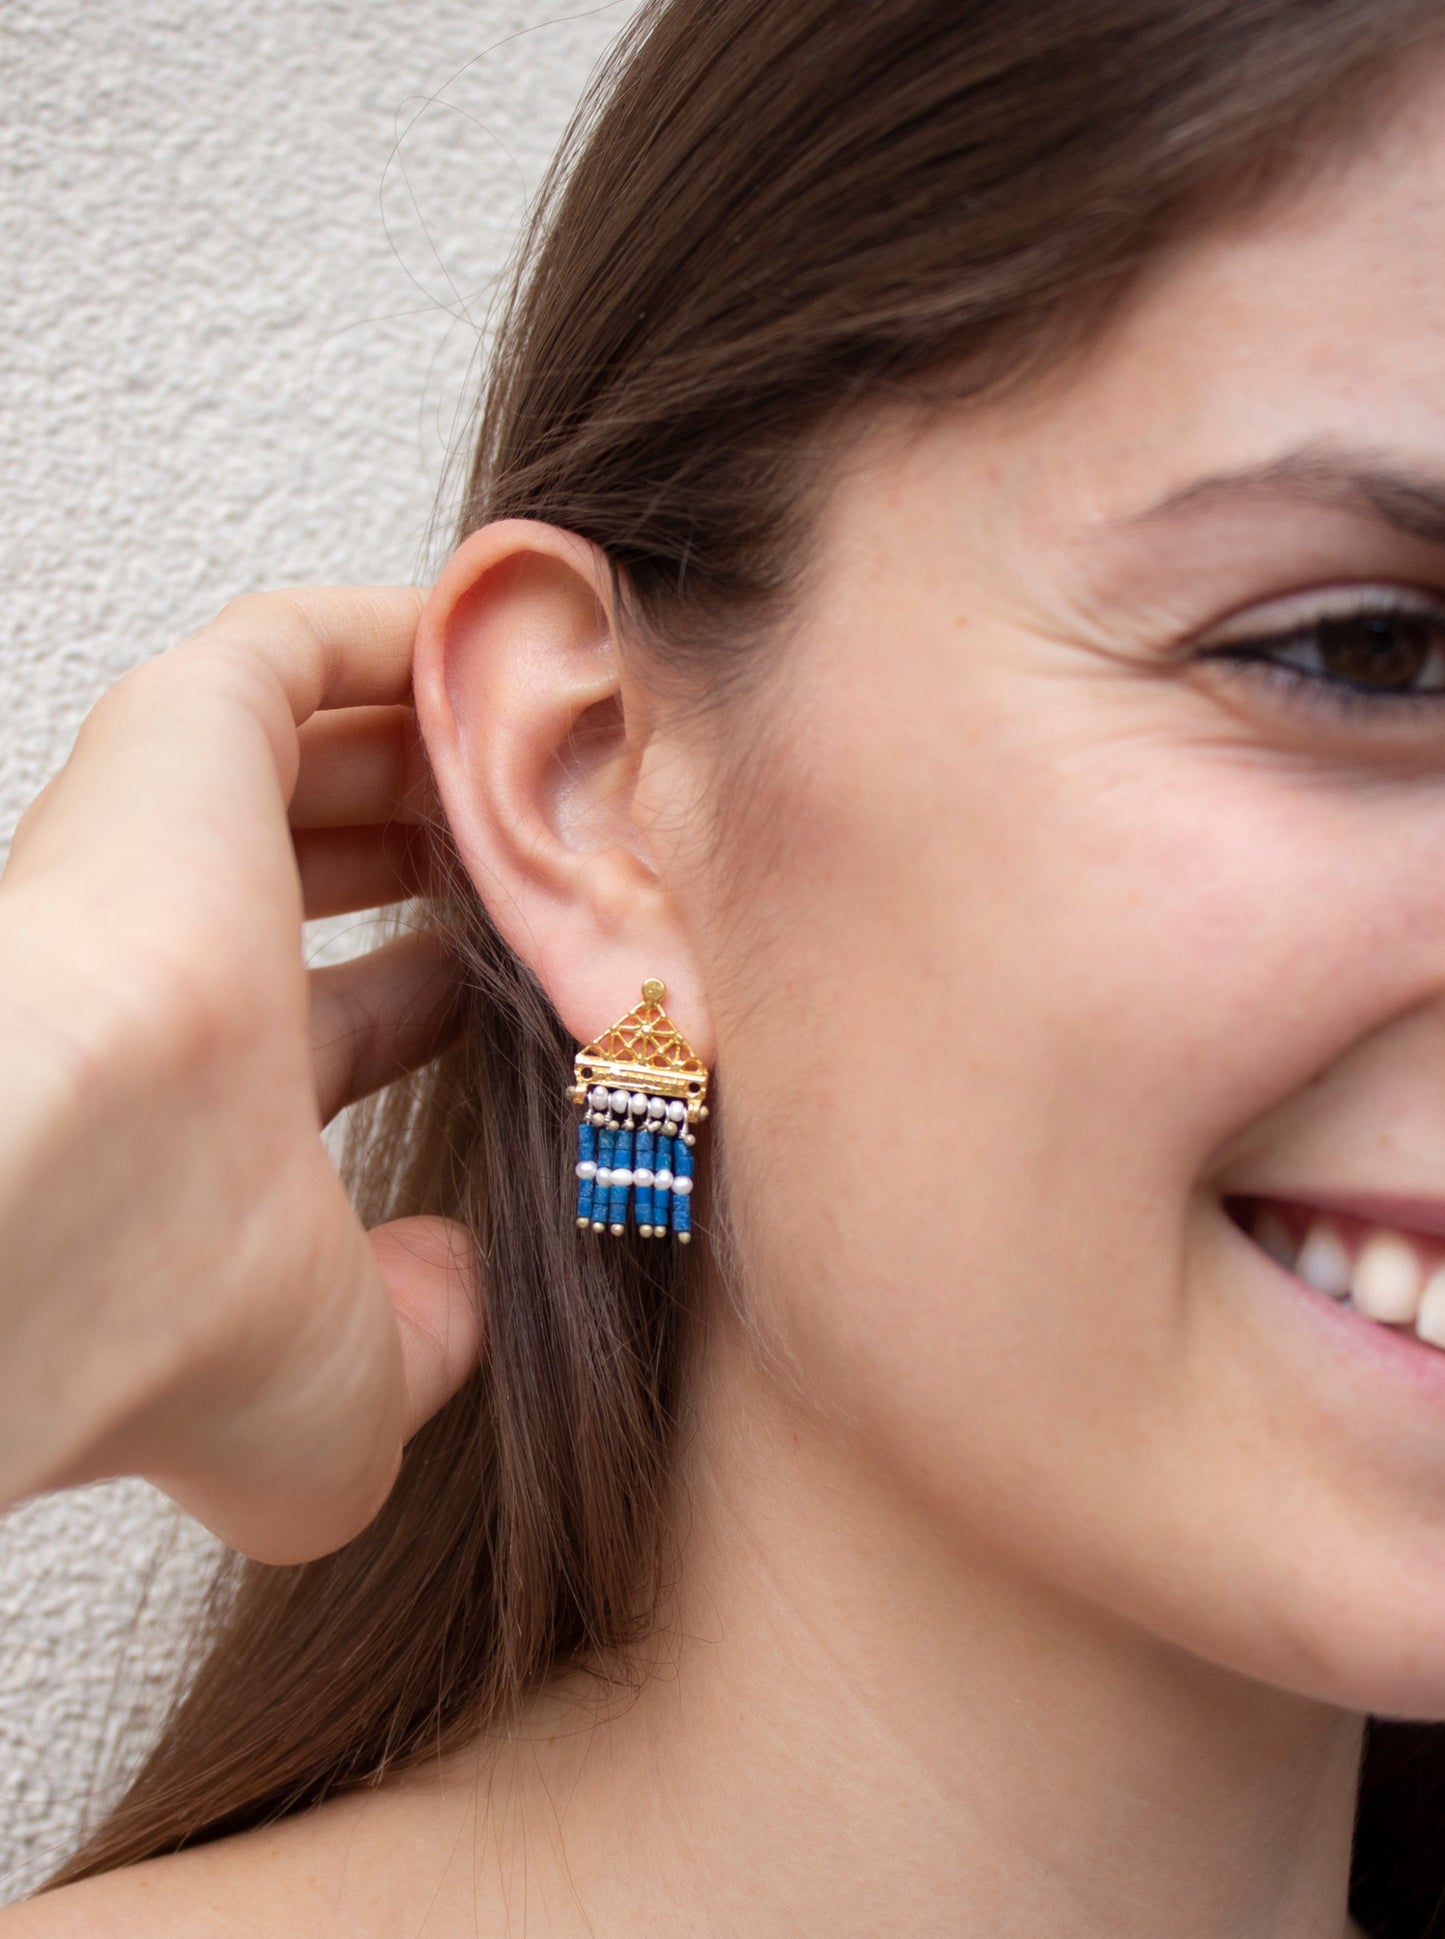 Lapis lazuli earrings with pearl